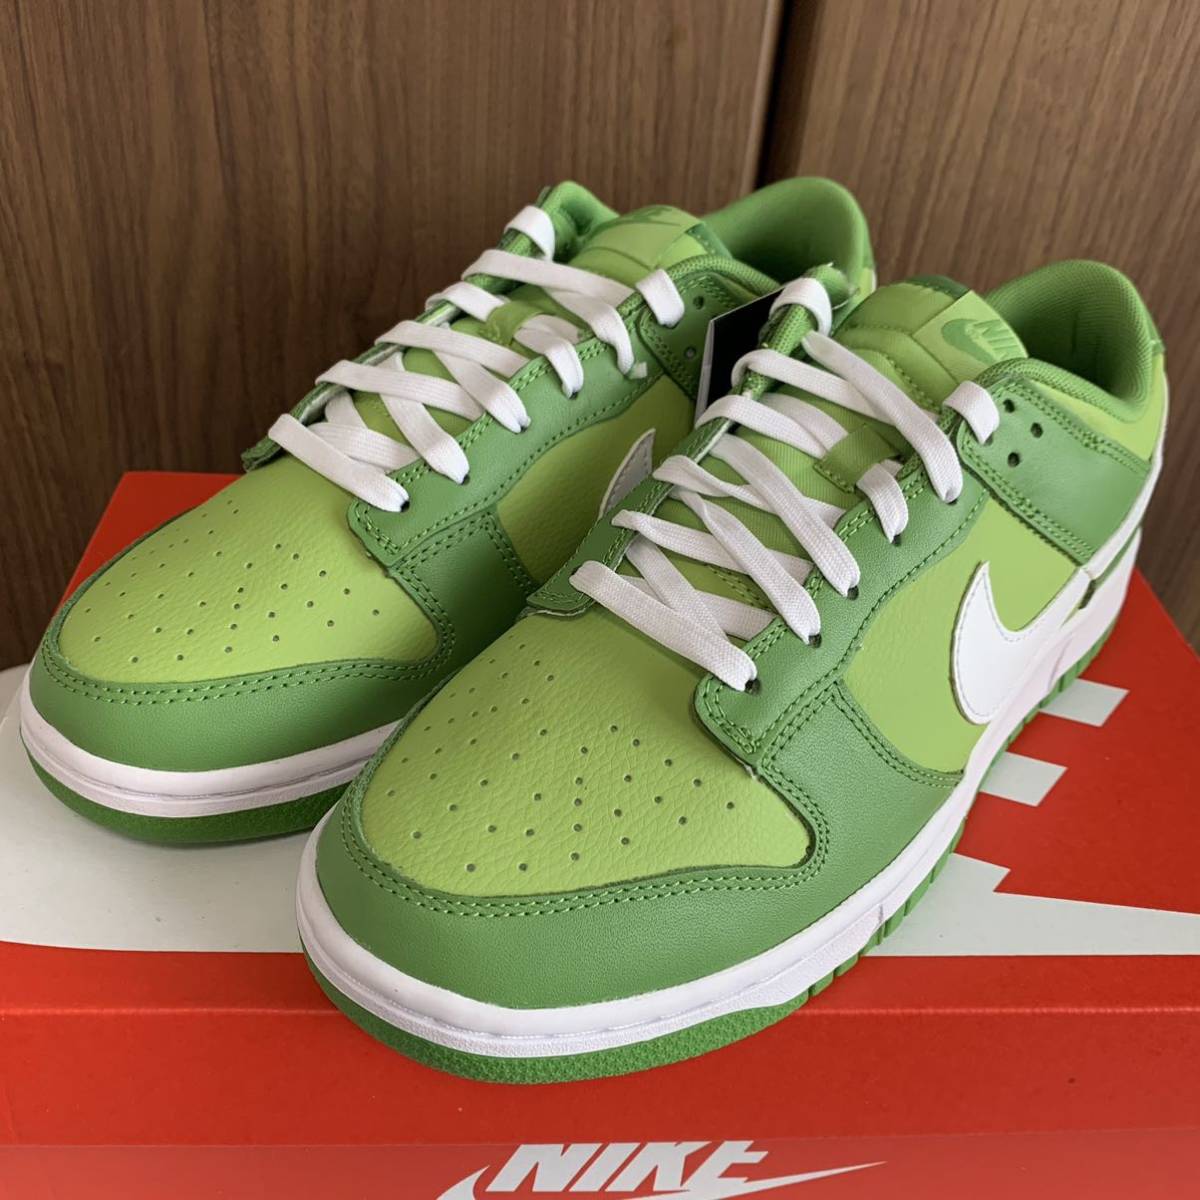 29㎝ Nike Dunk Low "Kermit/Chlorophyll"ナイキ ダンク ロー "カーミット/クロロフィル